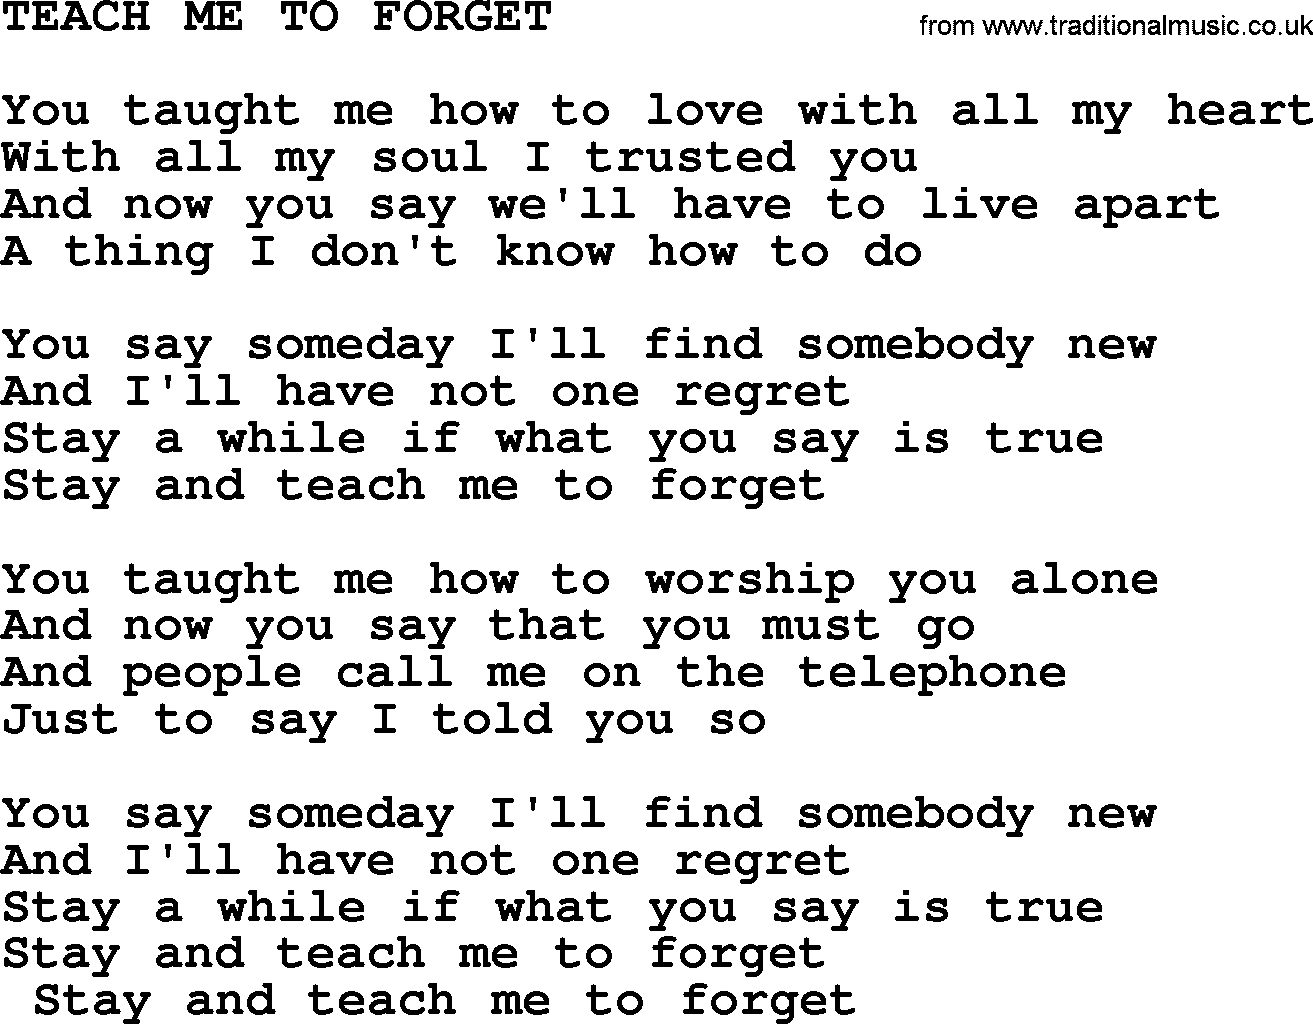 Merle Haggard song: Teach Me To Forget, lyrics.